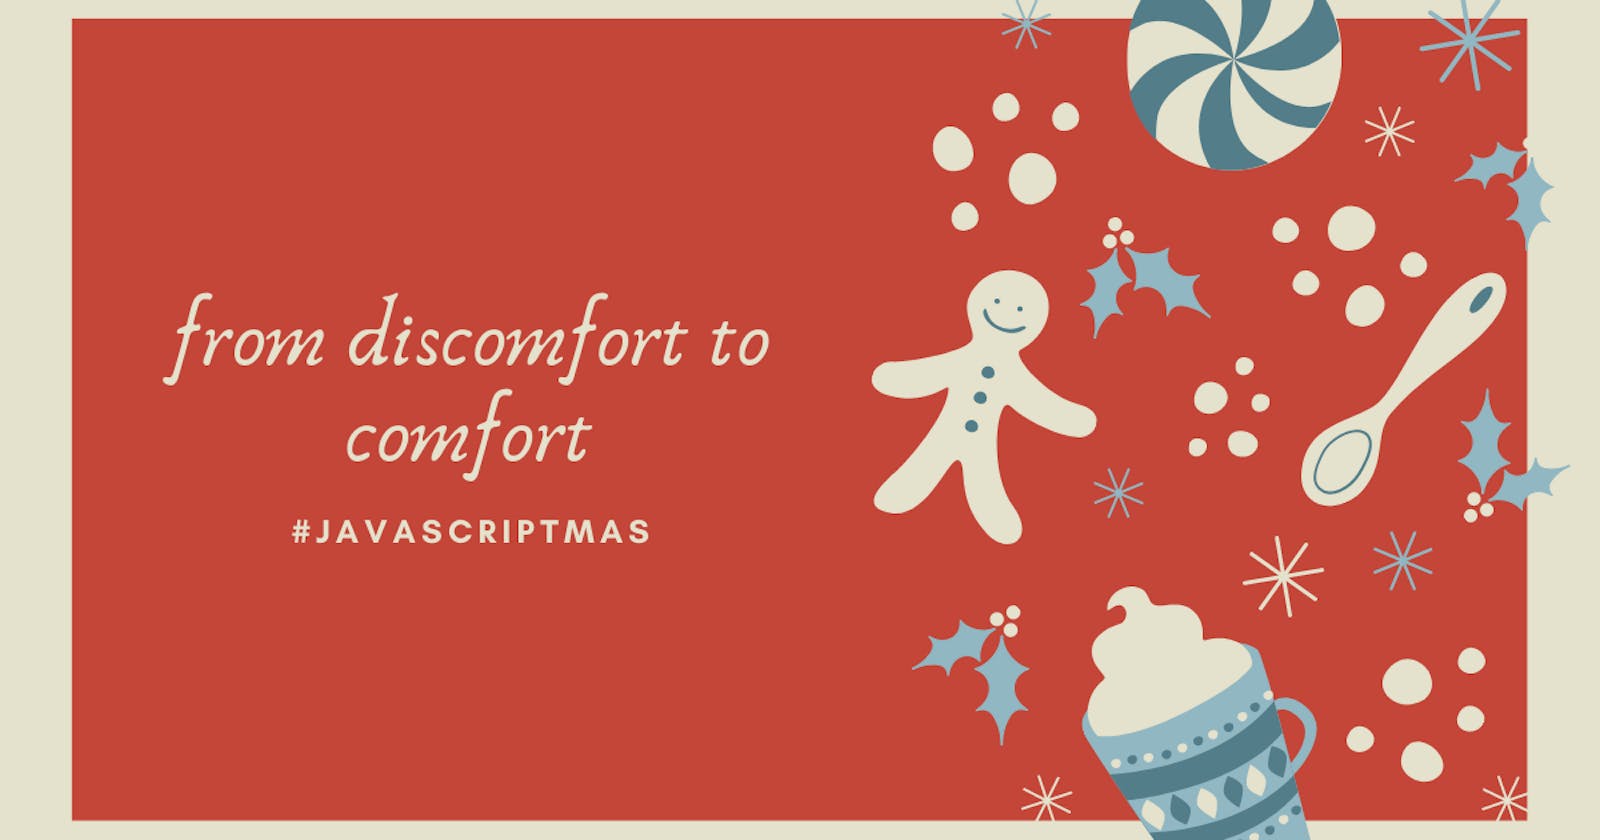 From discomfort to comfort: #JavaScriptmas